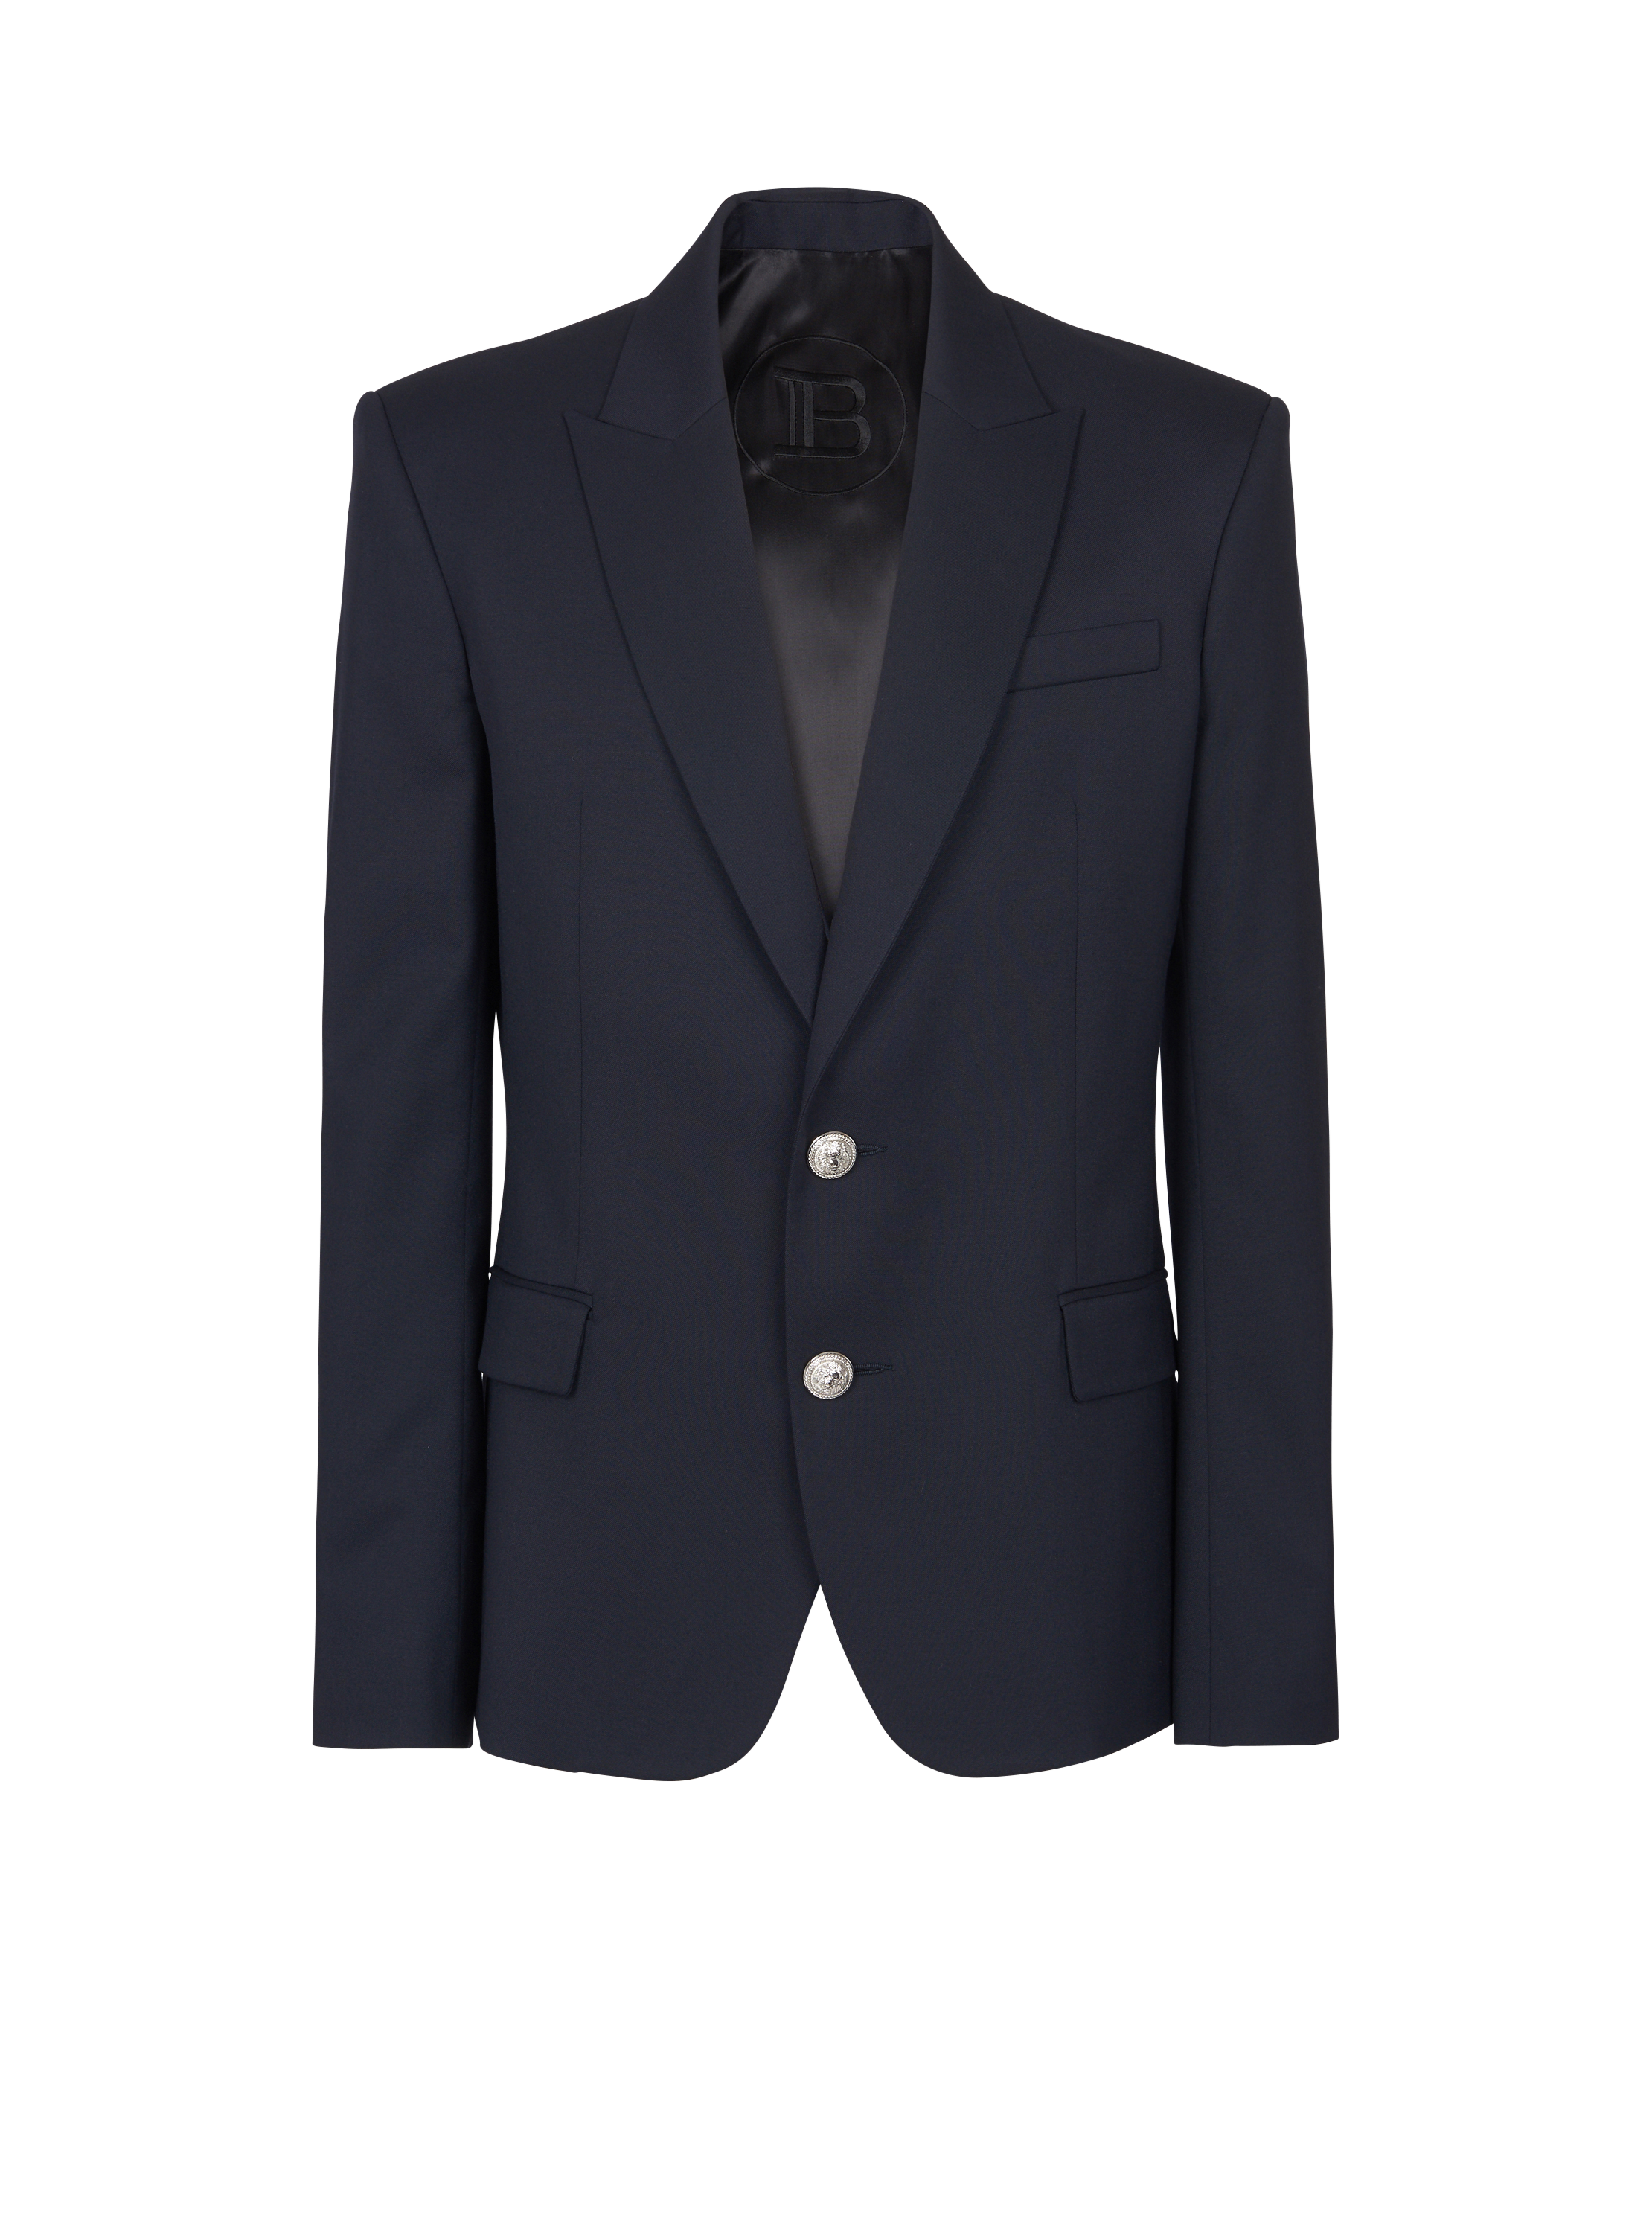 2-button wool jacket, navy, hi-res